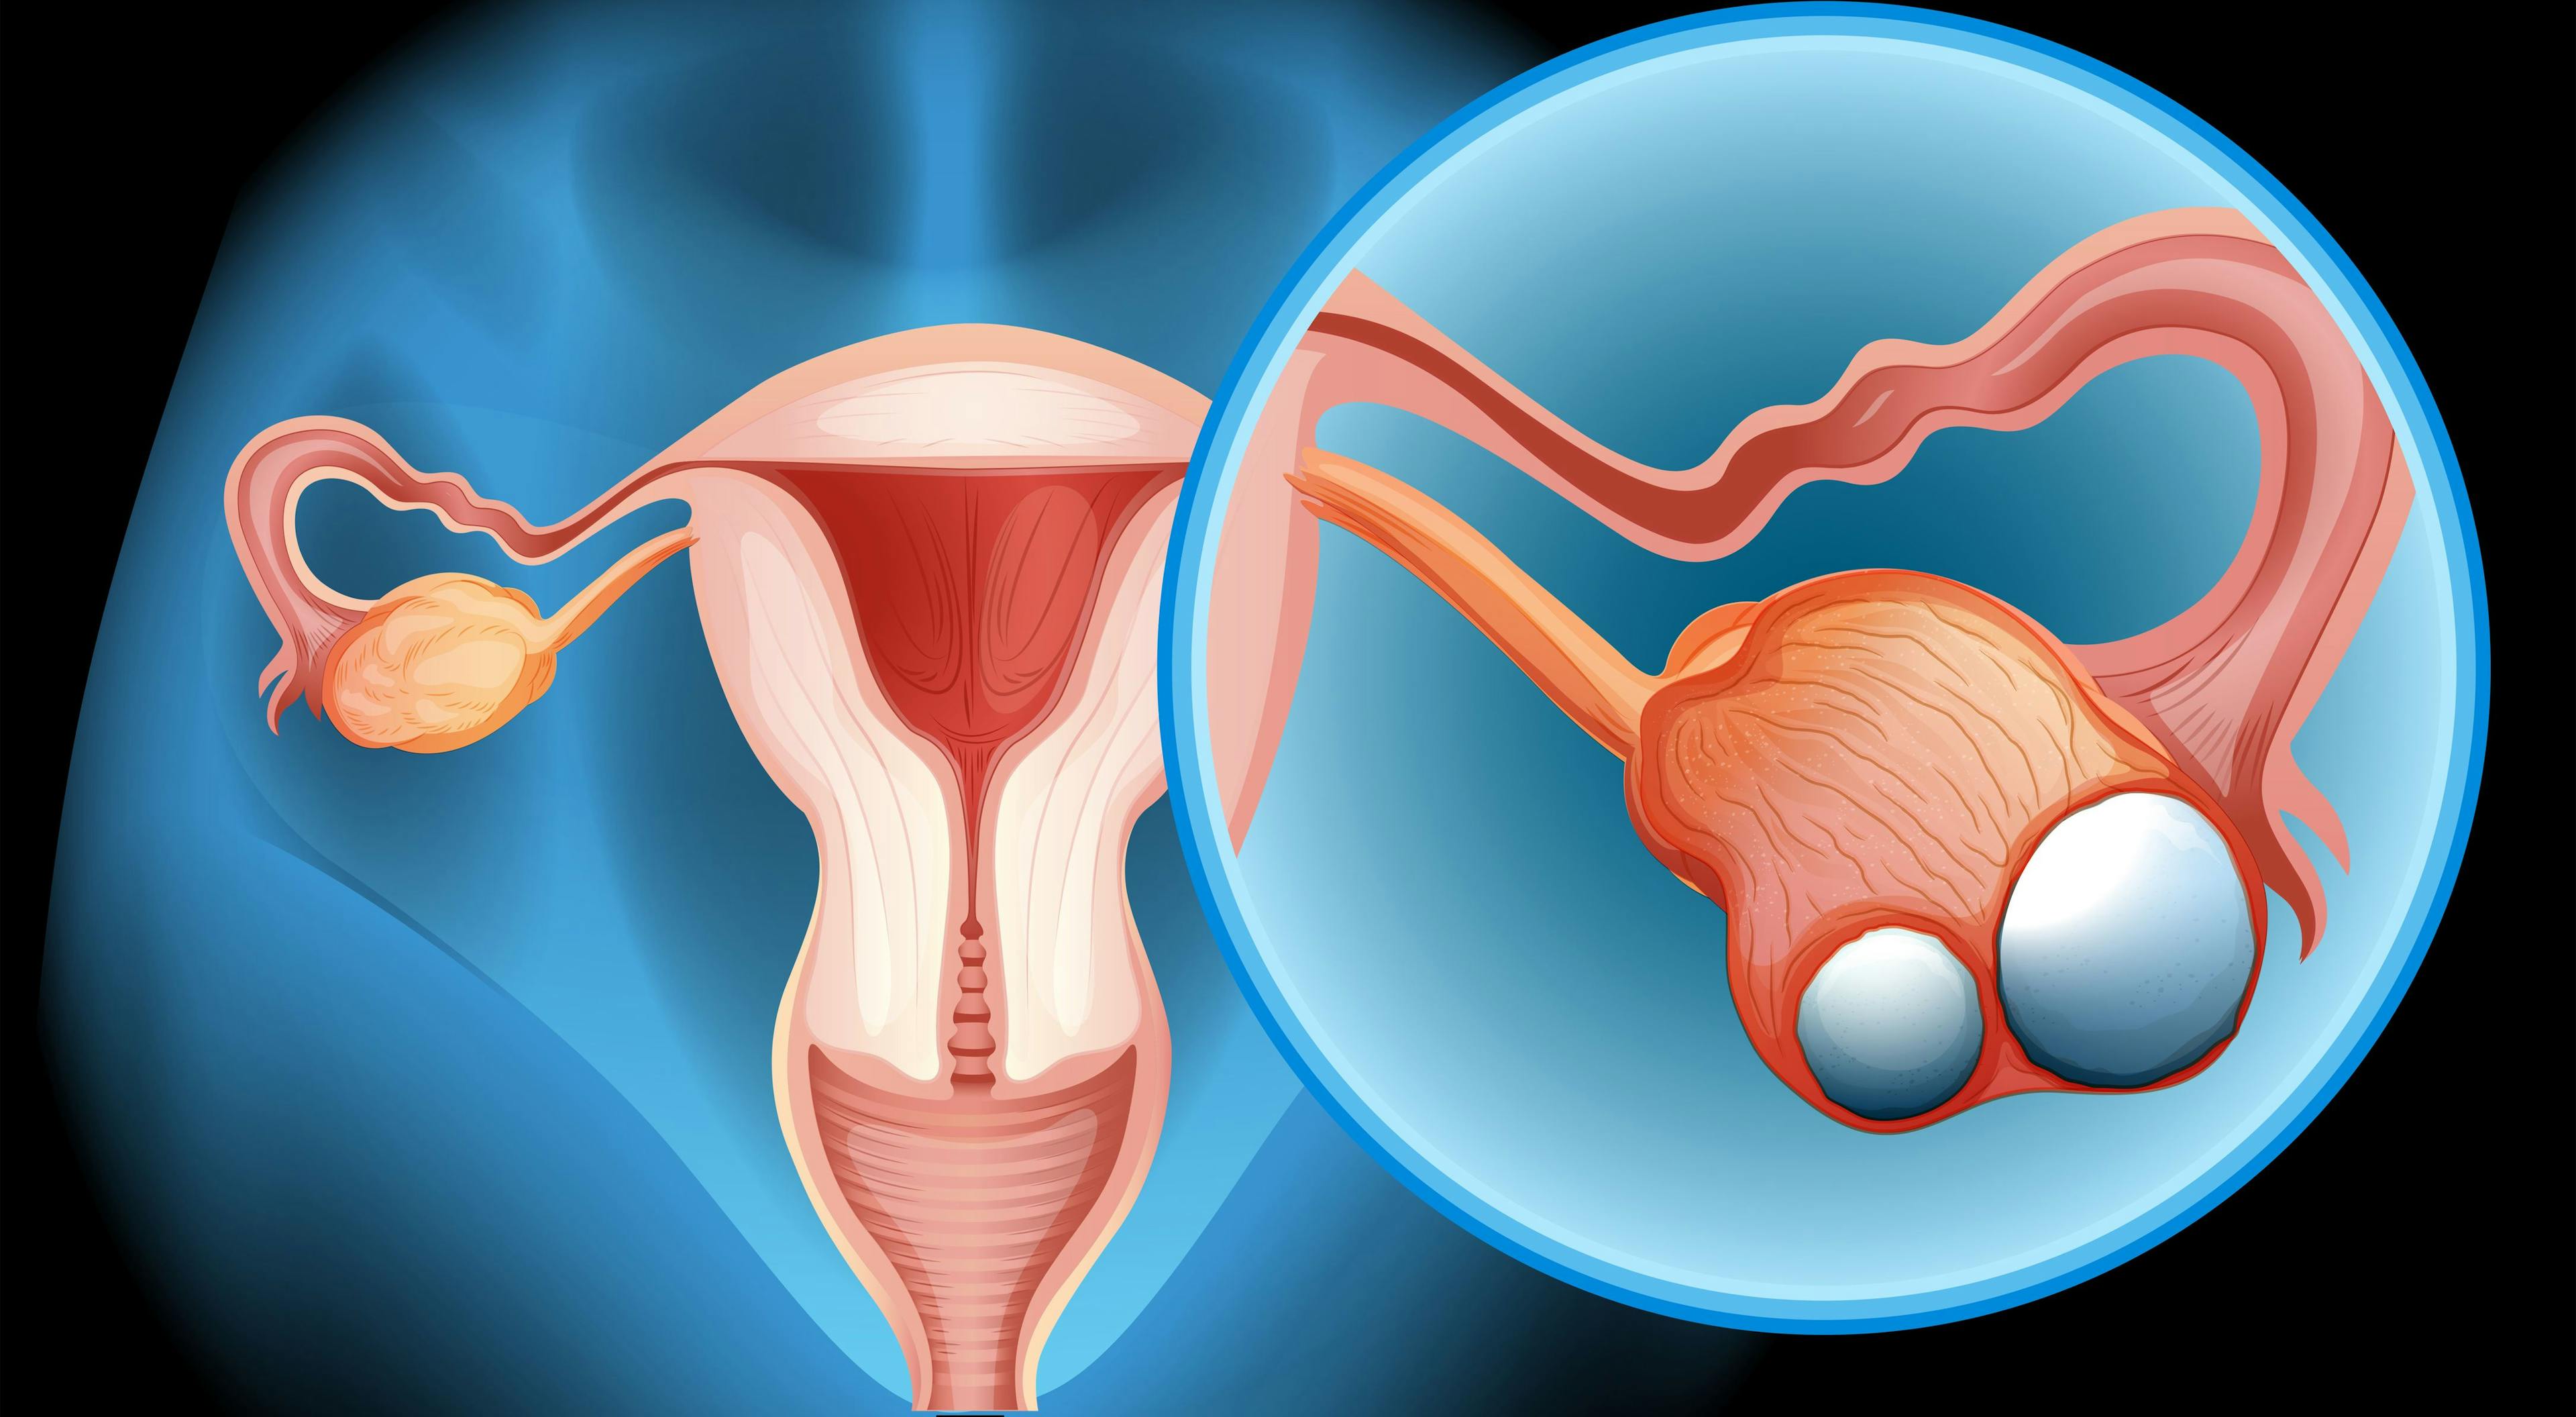 Maintenance Lynparza Improves PFS for Ovarian Cancer